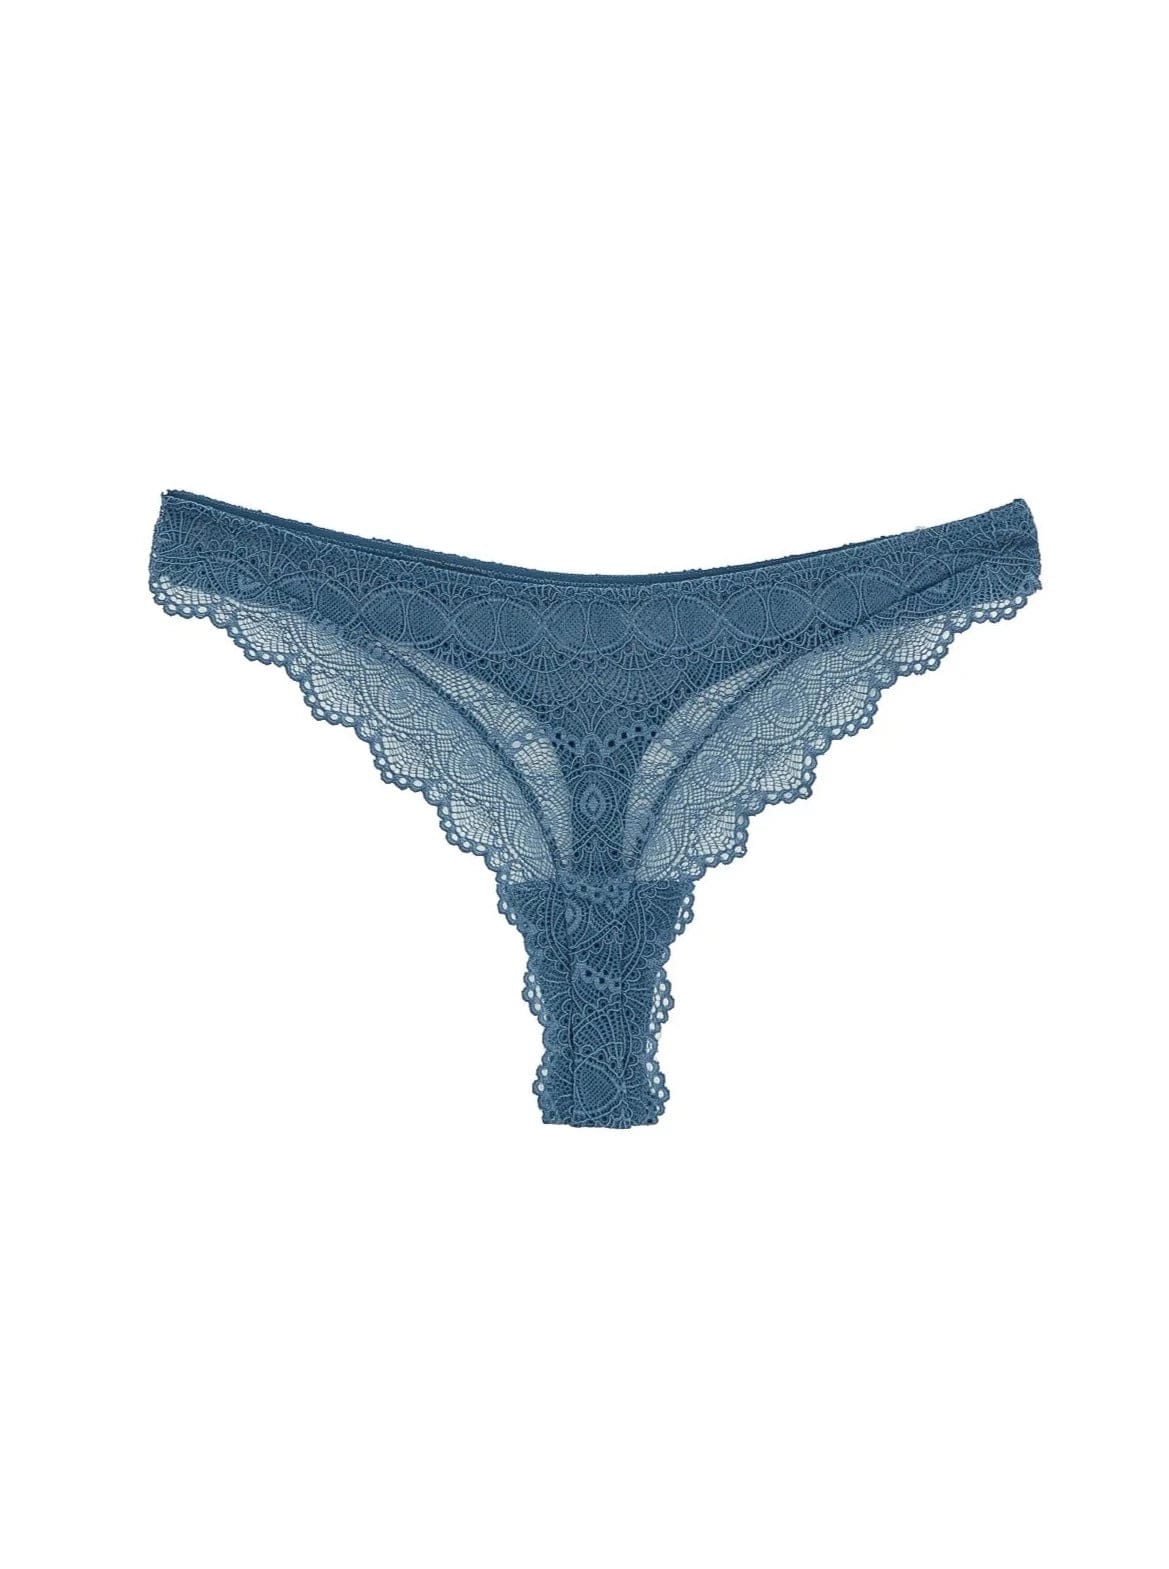 Else Underwear Cornflower / XS Camellia Thong